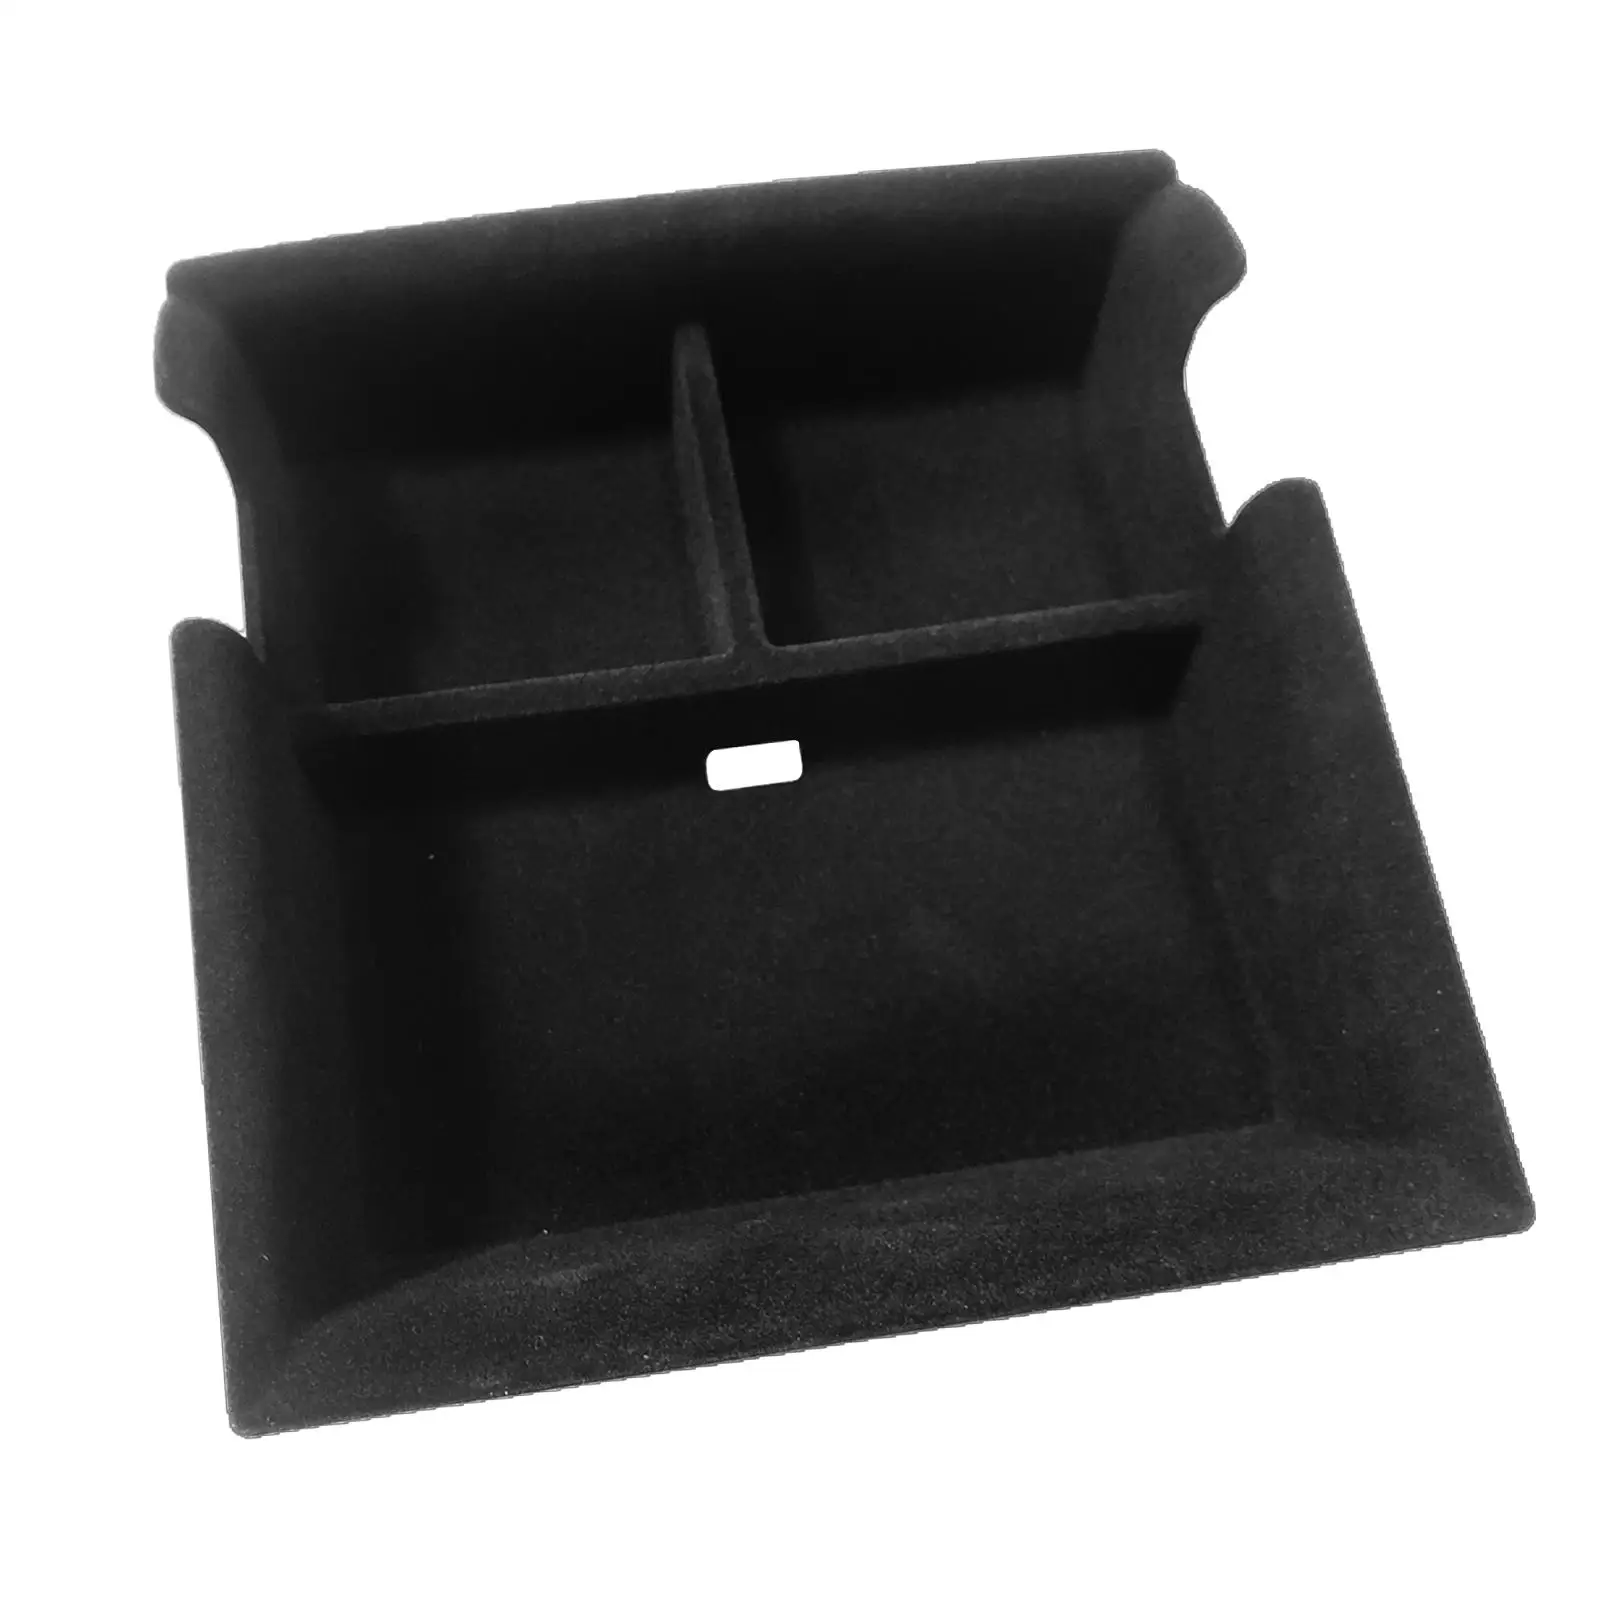 Auto Center Console Organizer Tray Armrest Storage Box/ for Yuan Plus Easy Installation Accessory/